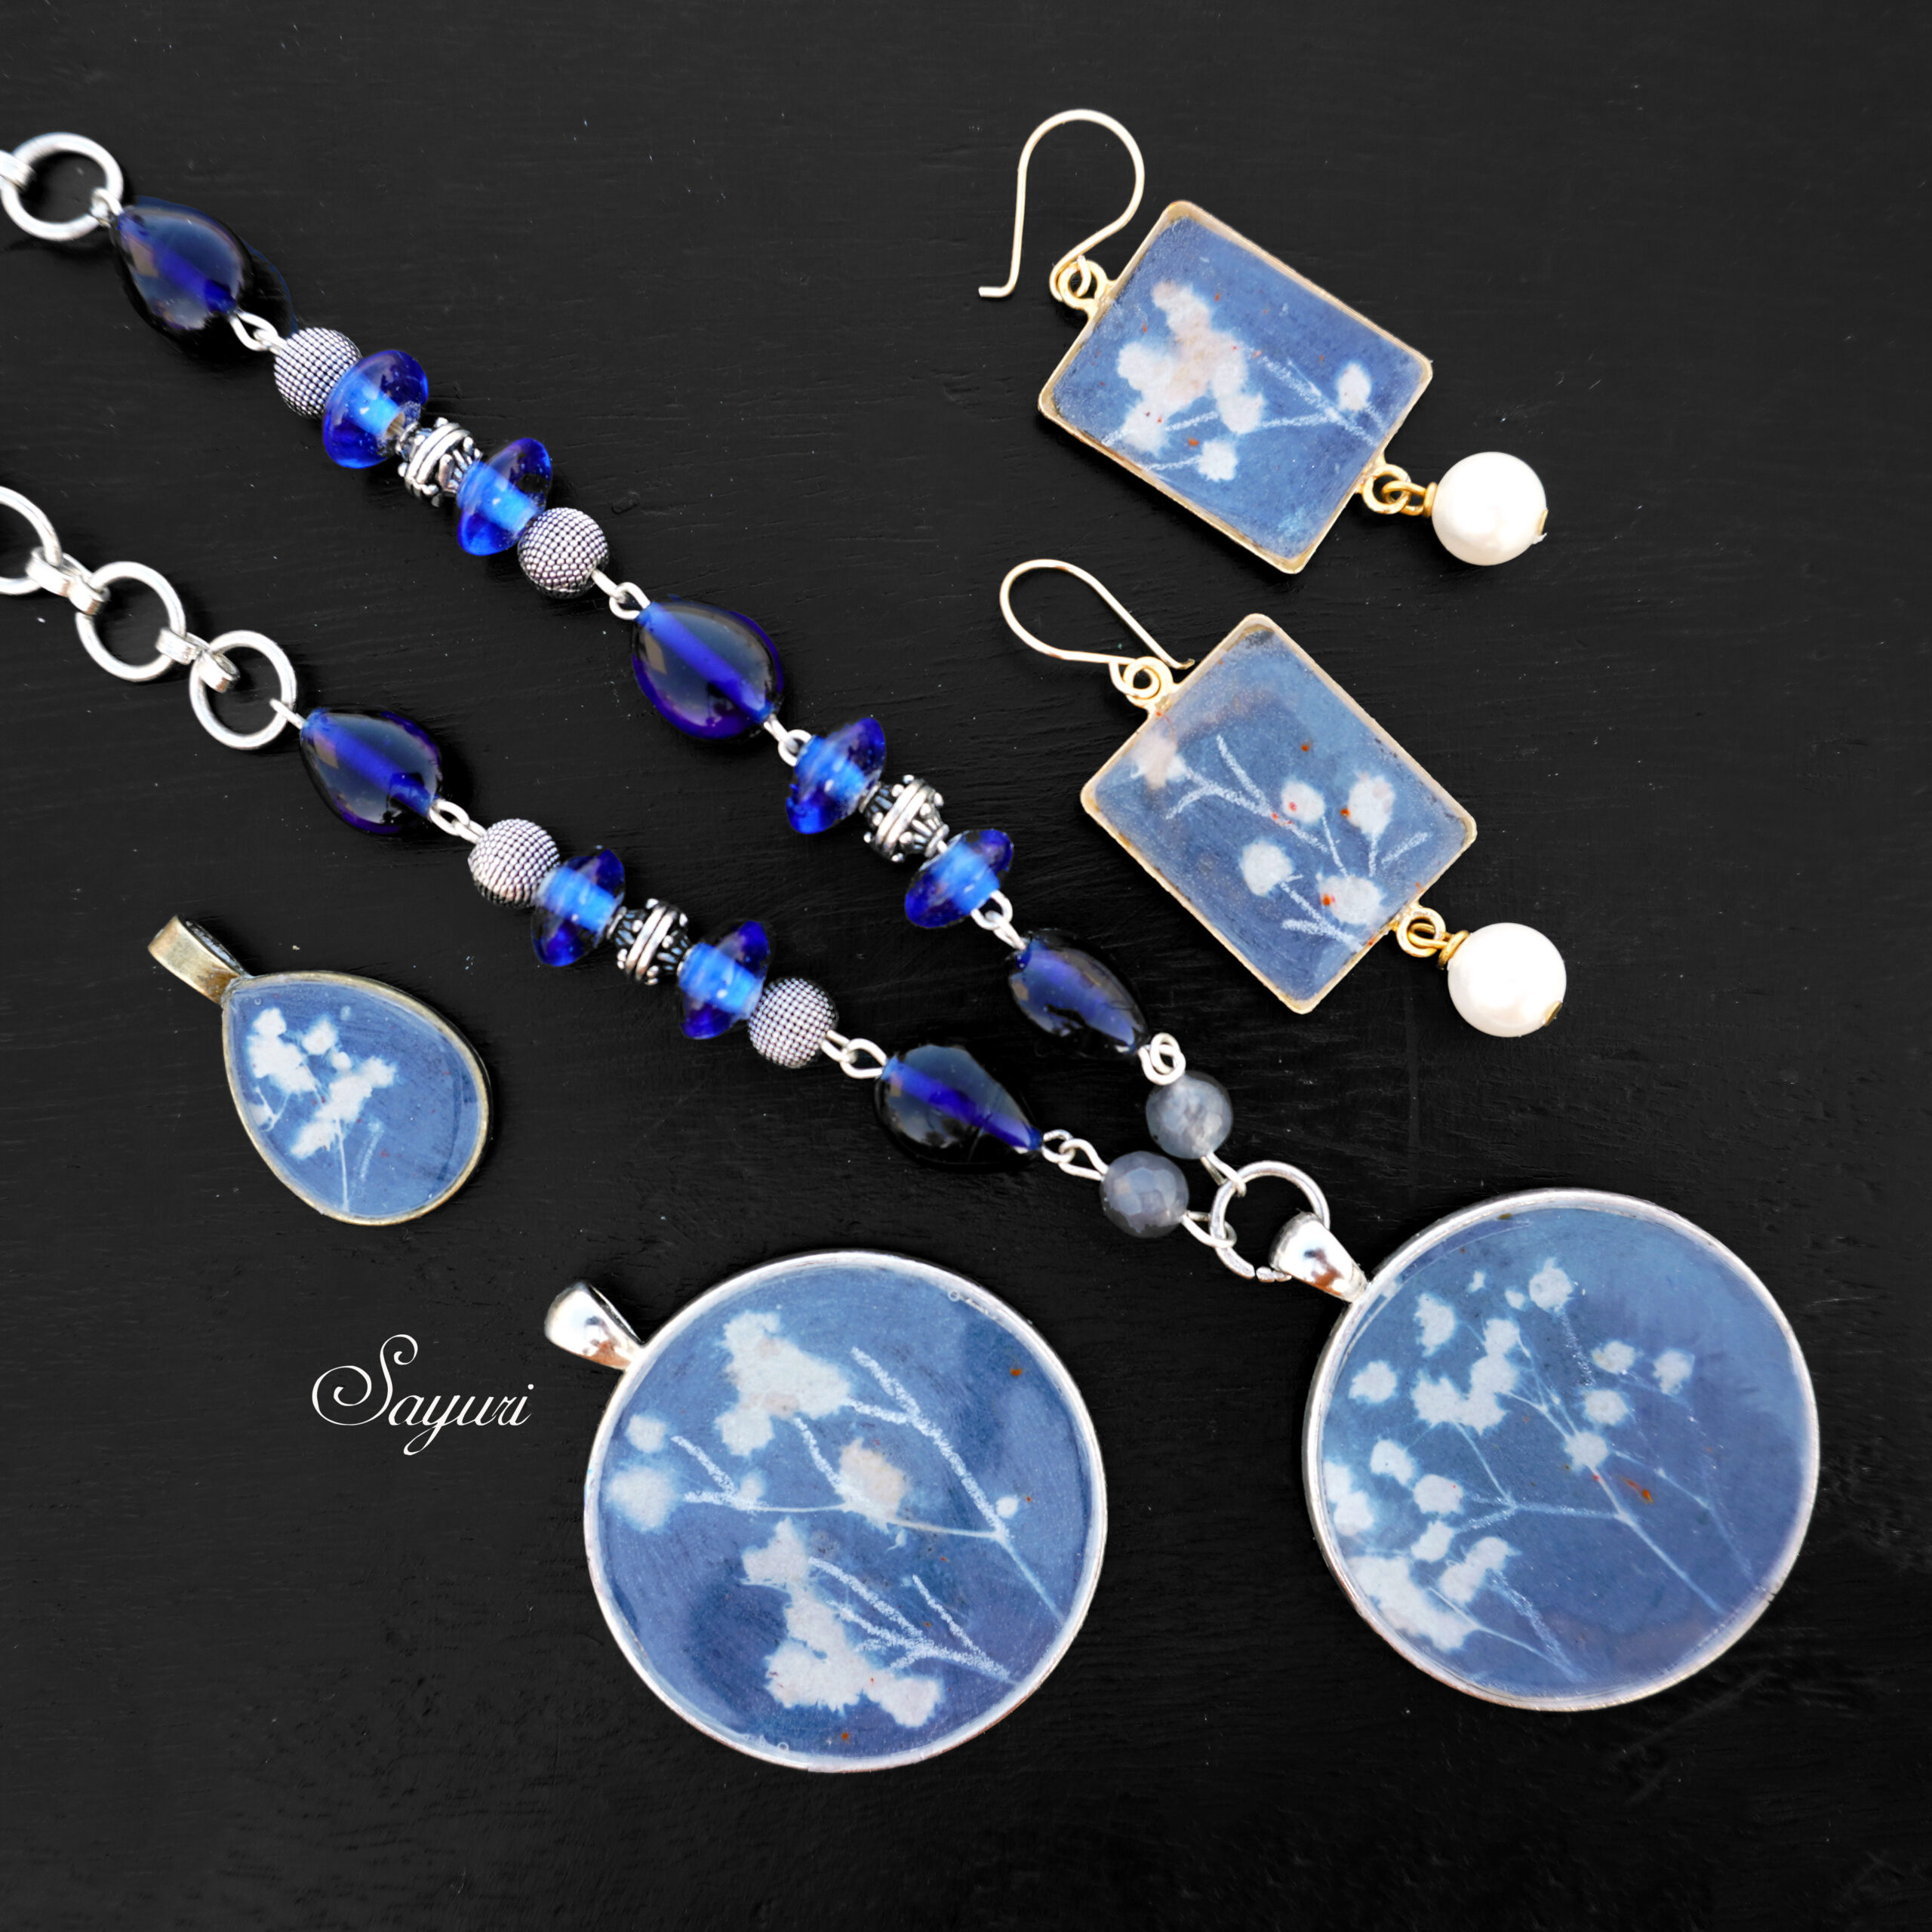 Cyanotype Jewellery tutorial